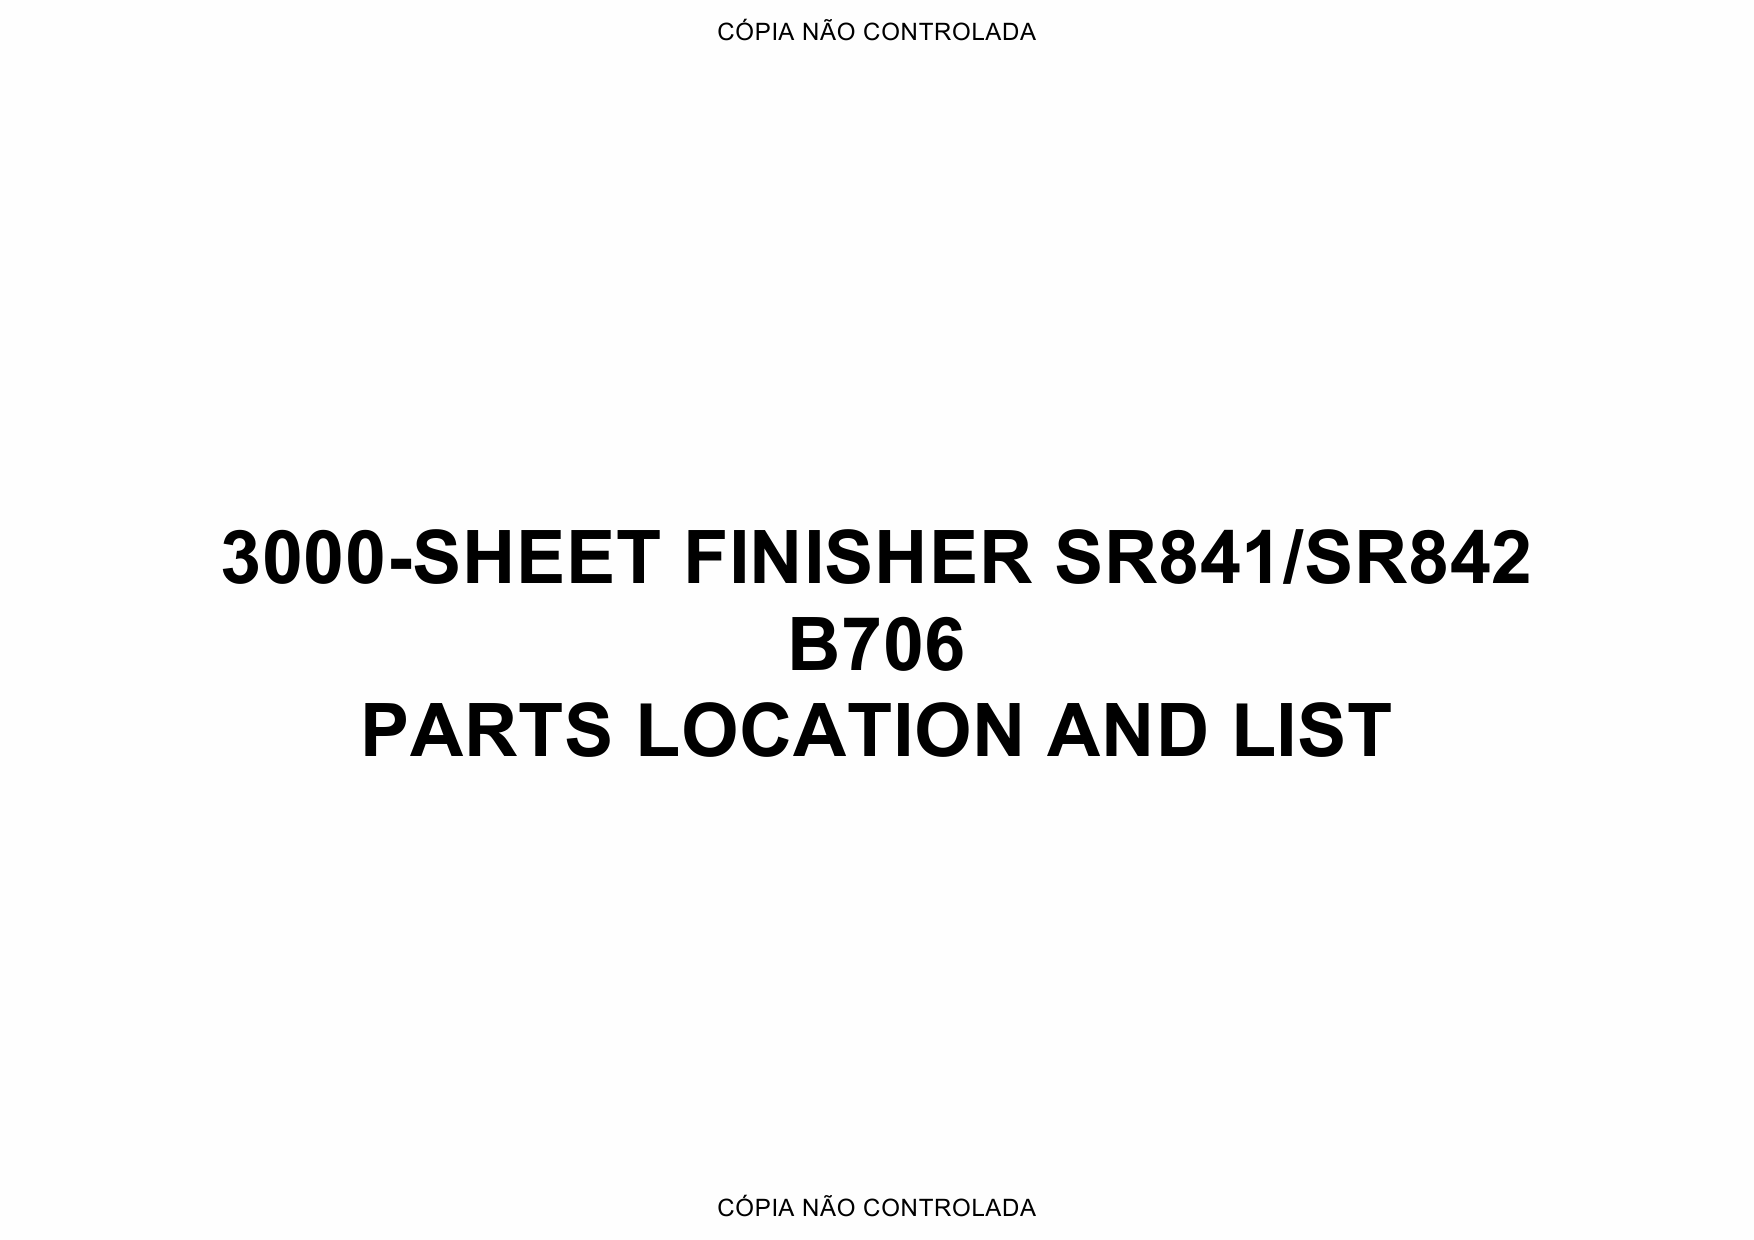 RICOH Options B706 3000-SHEET-FINISHER Parts Catalog PDF download-1